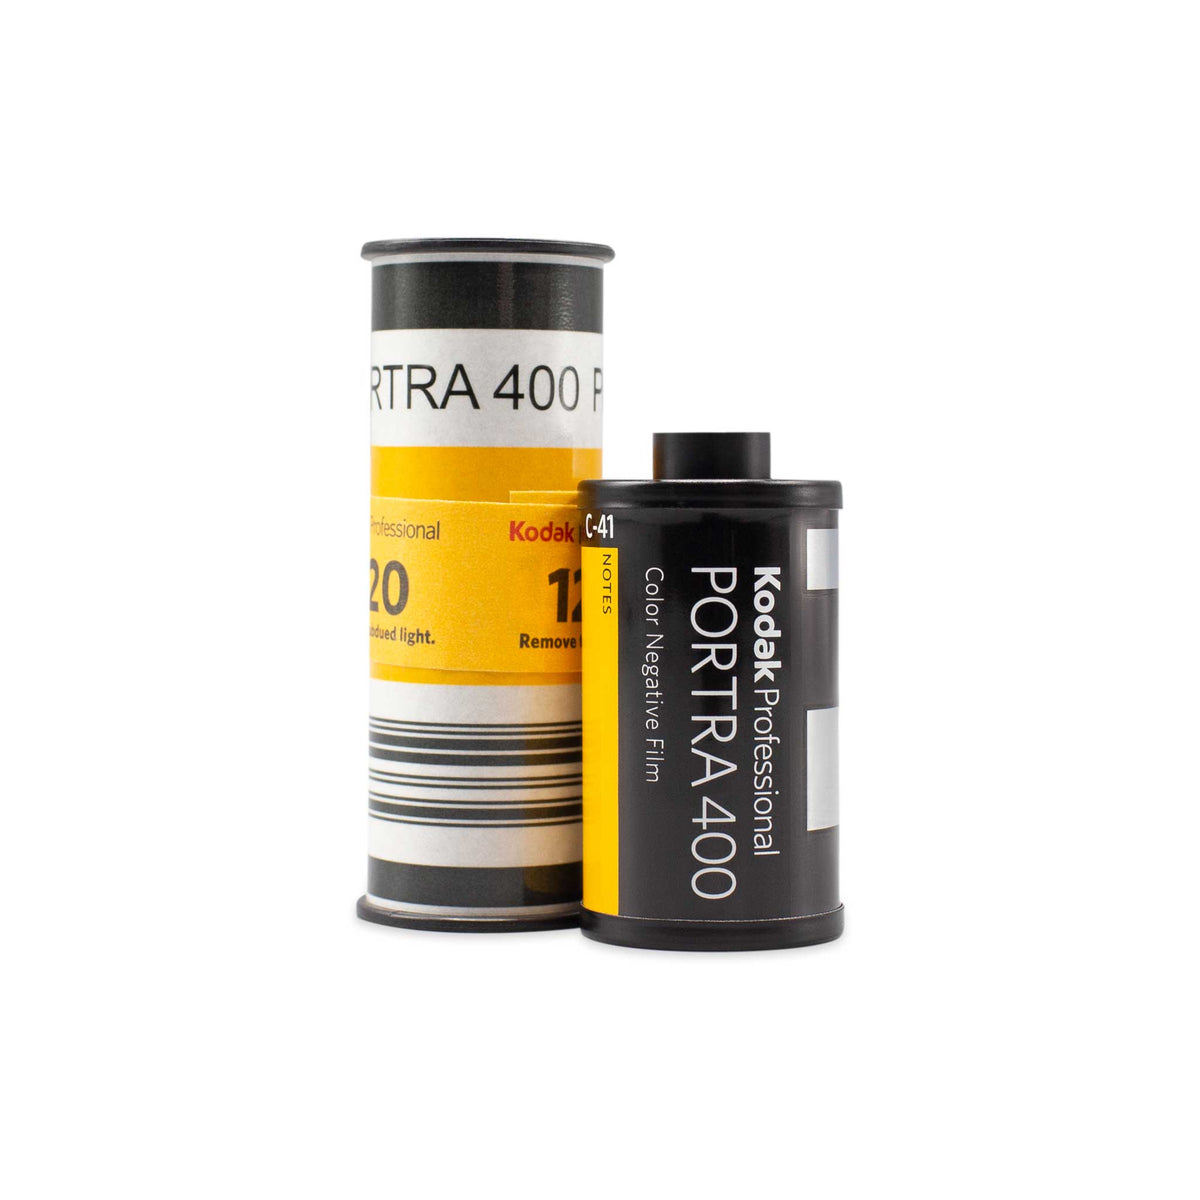 Kodak Professional Portra 400 Color Negative Film (35mm Roll Film